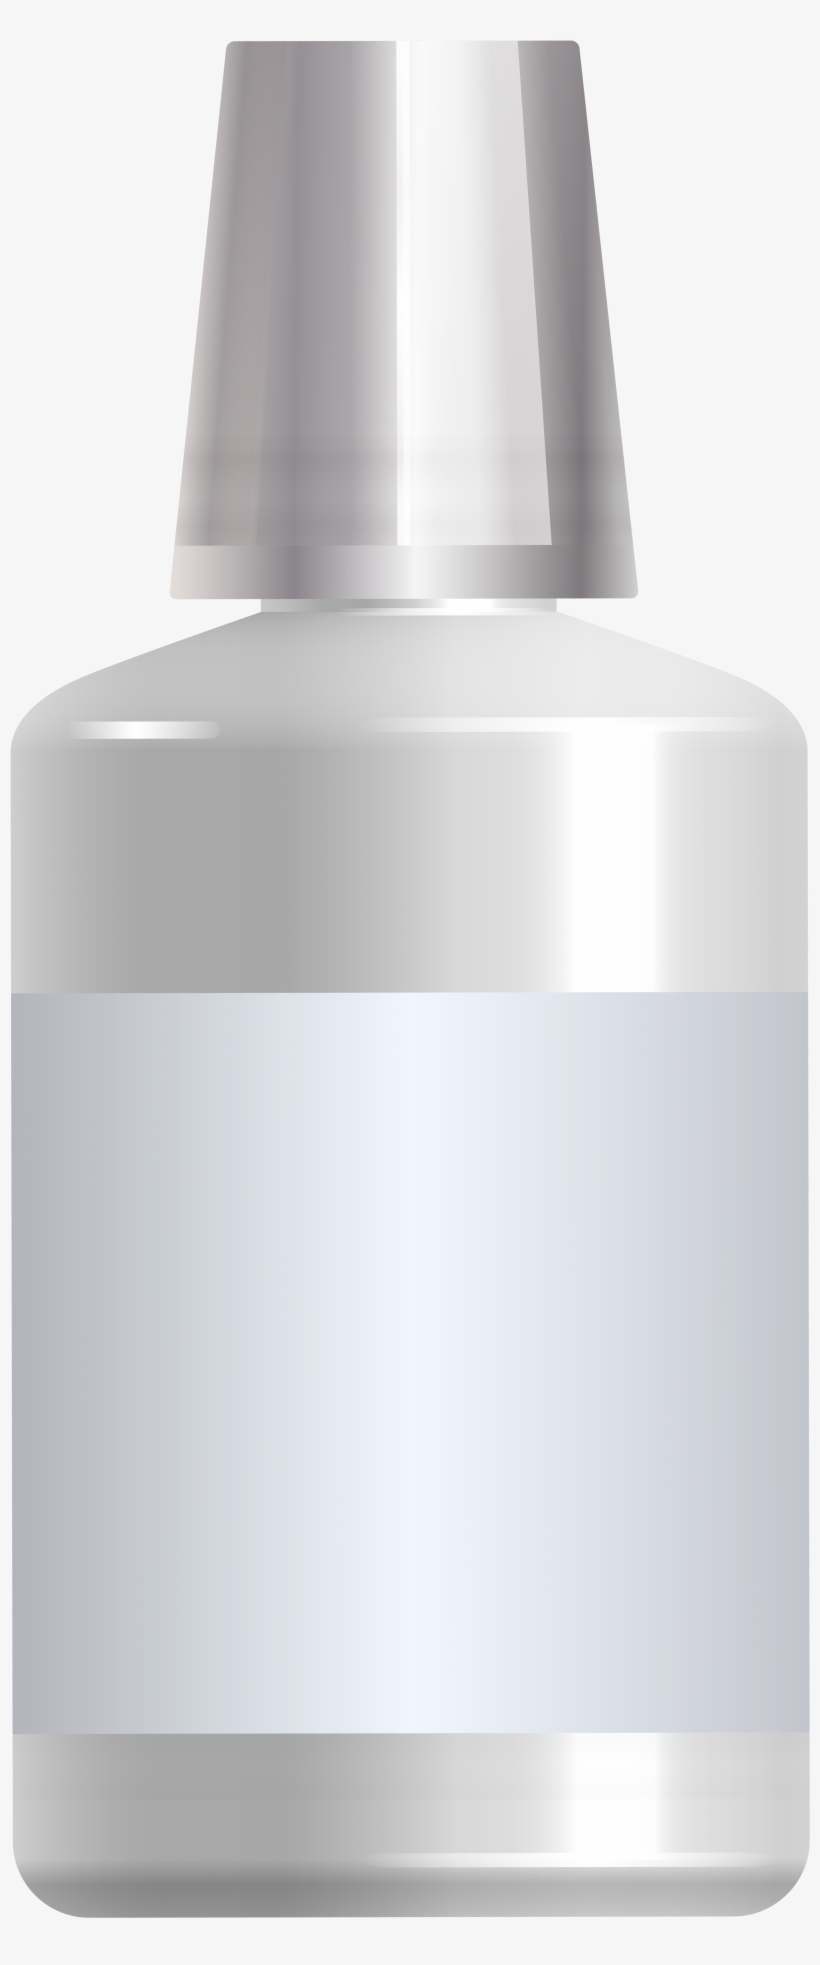 Glue Png Clip Art - Lampshade, transparent png #2101052